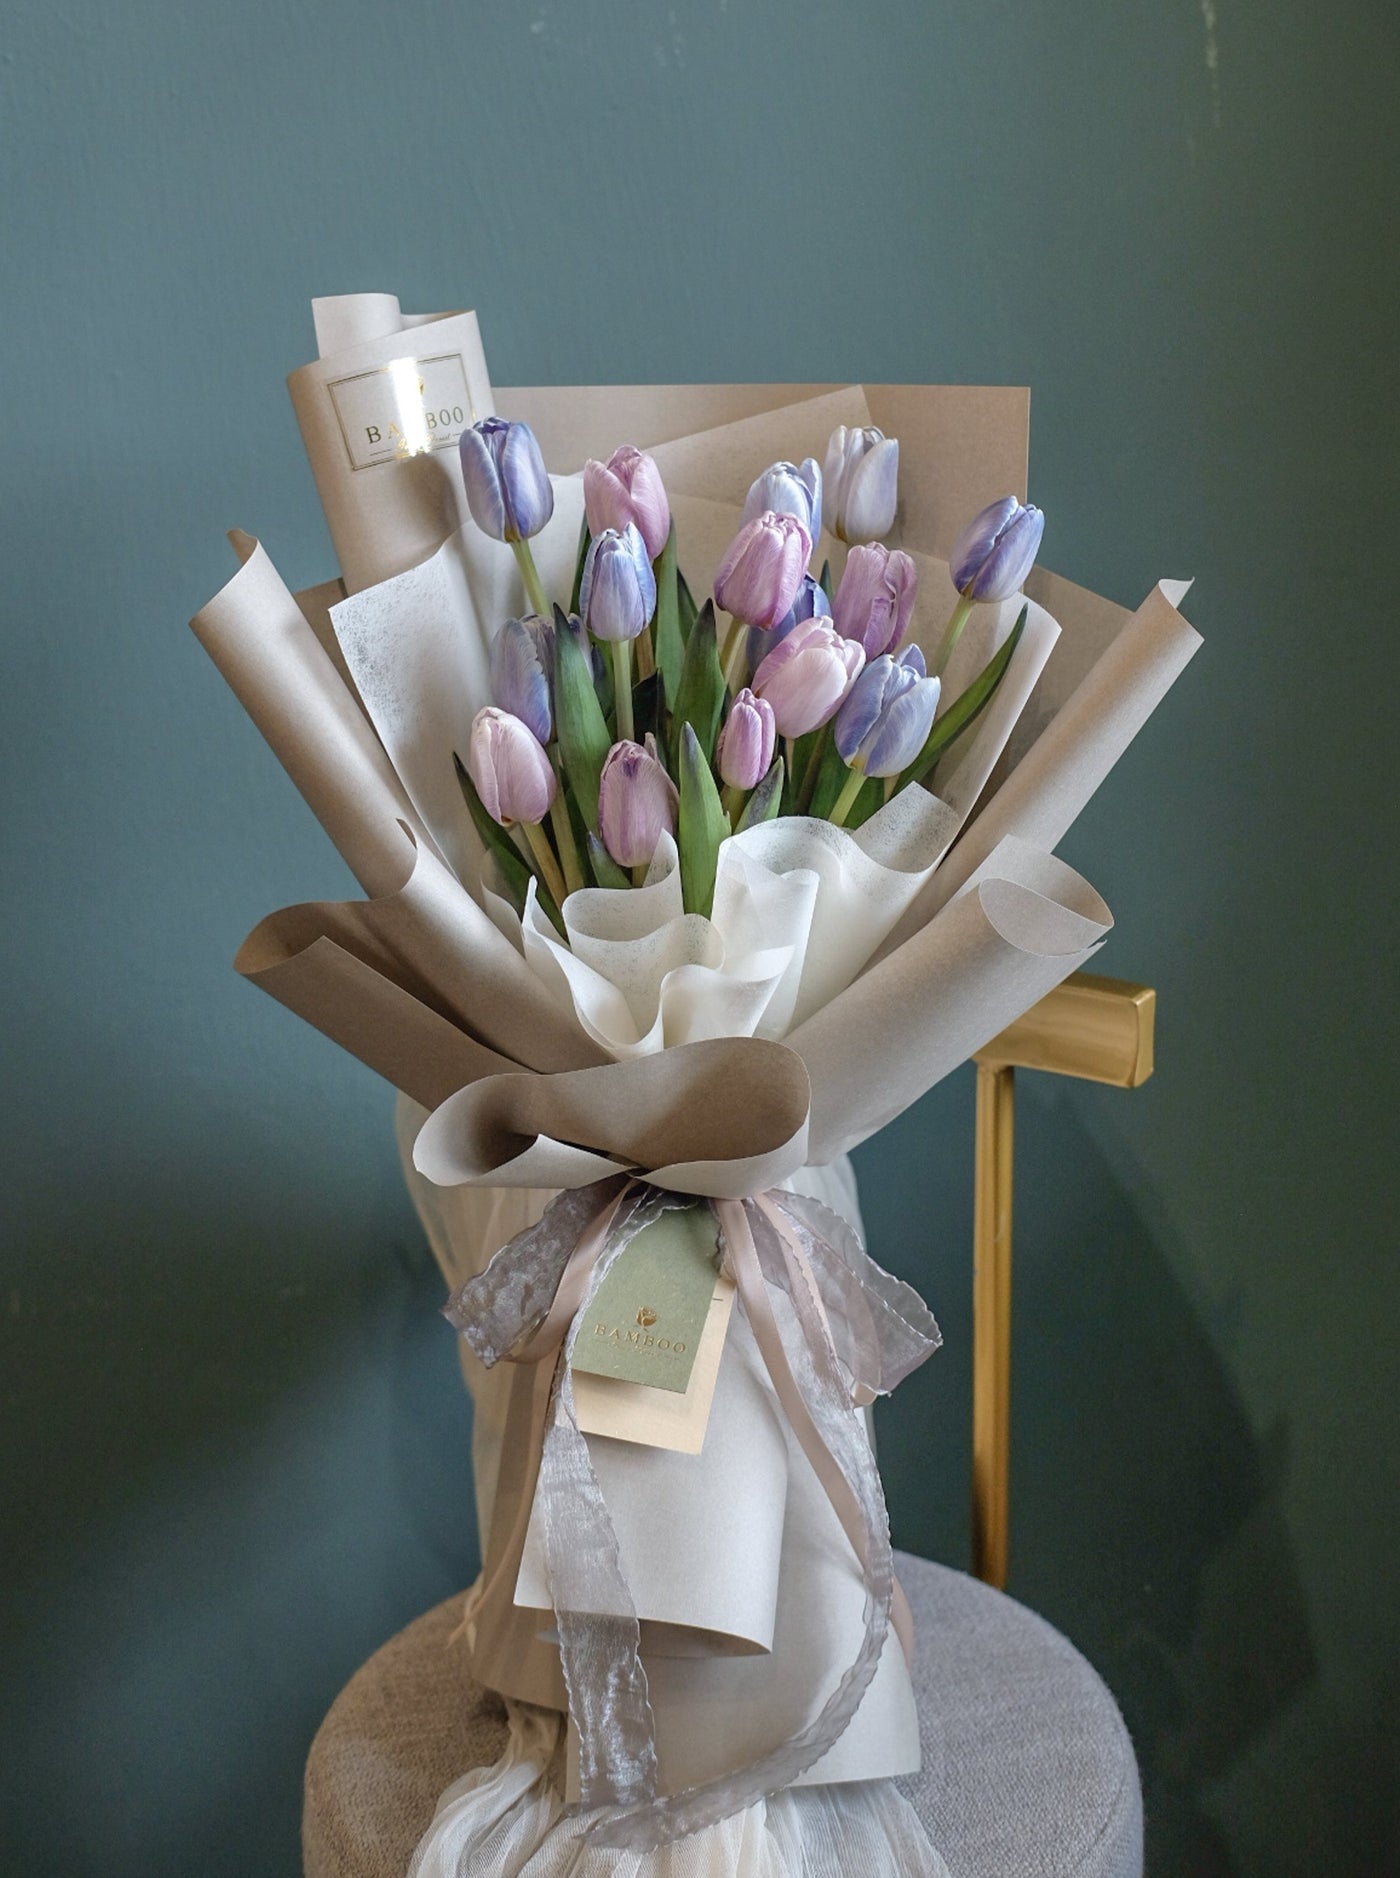 buy tulips in penang, fresh Hoilland tulips in penang by designer florist.